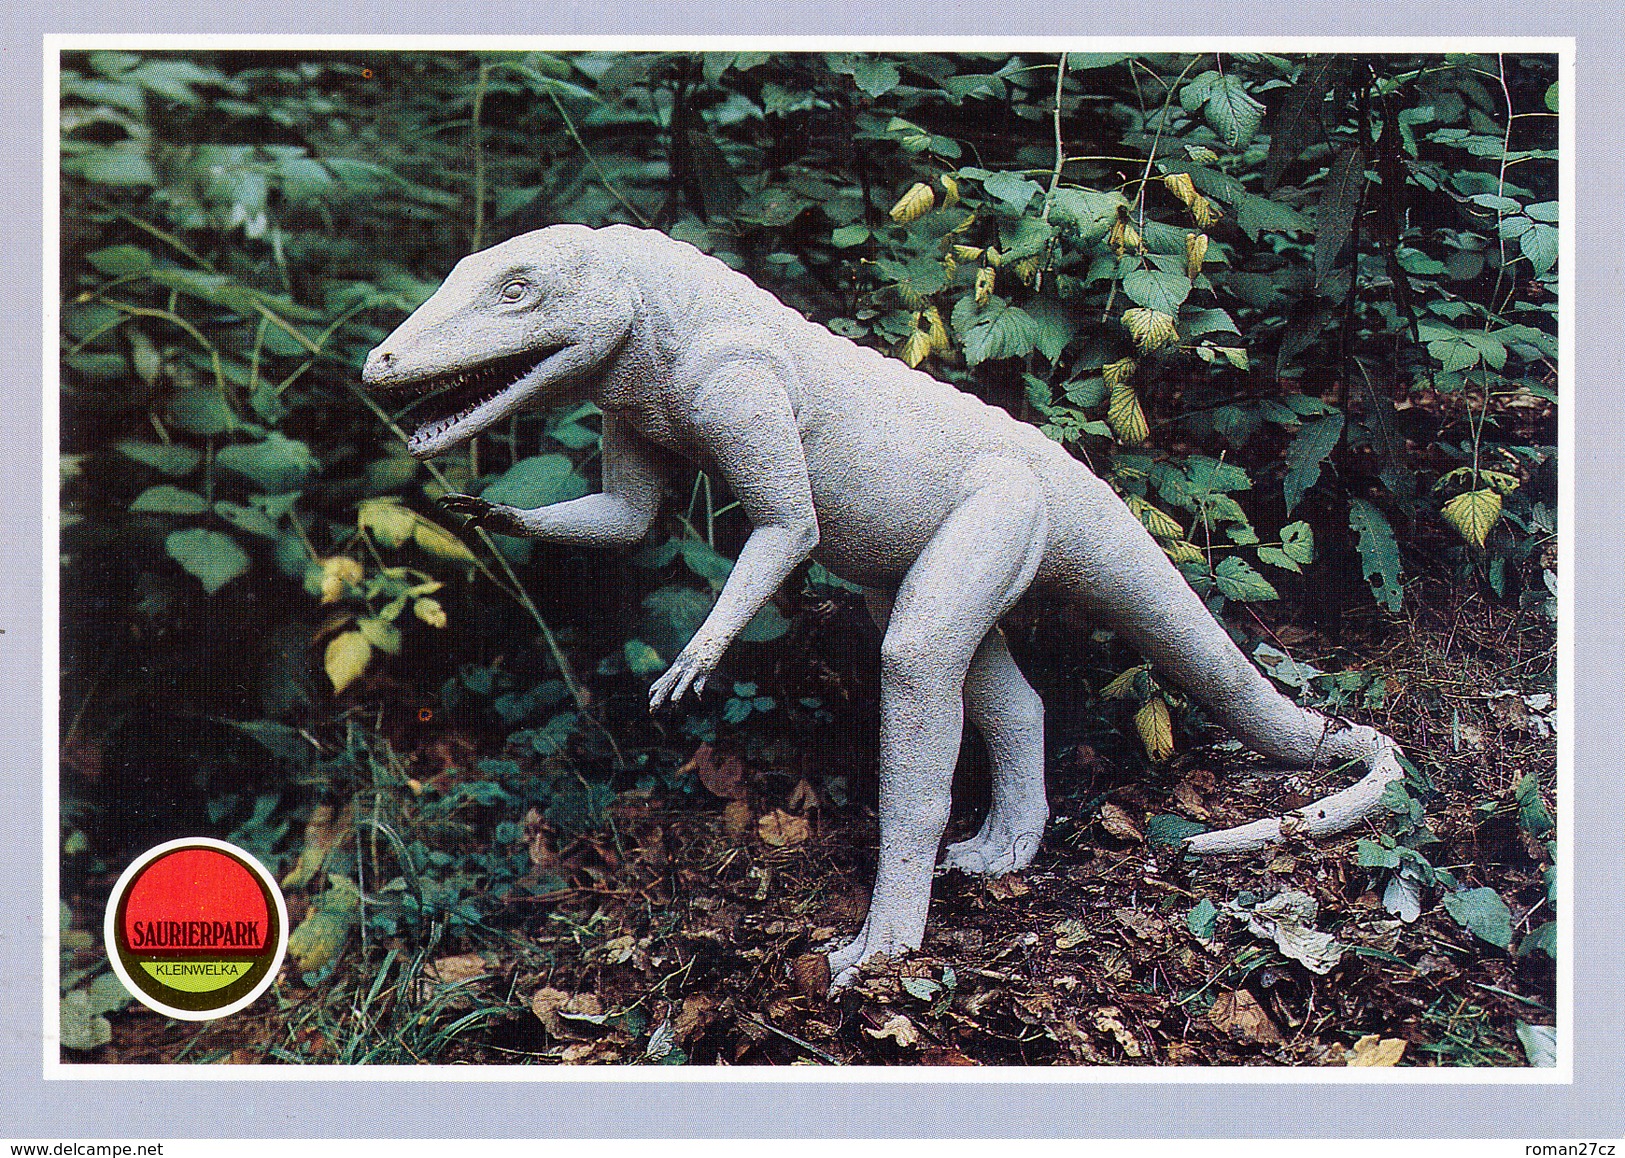 Saurierpark Kleinwelka, Germany, Ca. 1980s, Dinosaur - Hesperosuchus - Bautzen